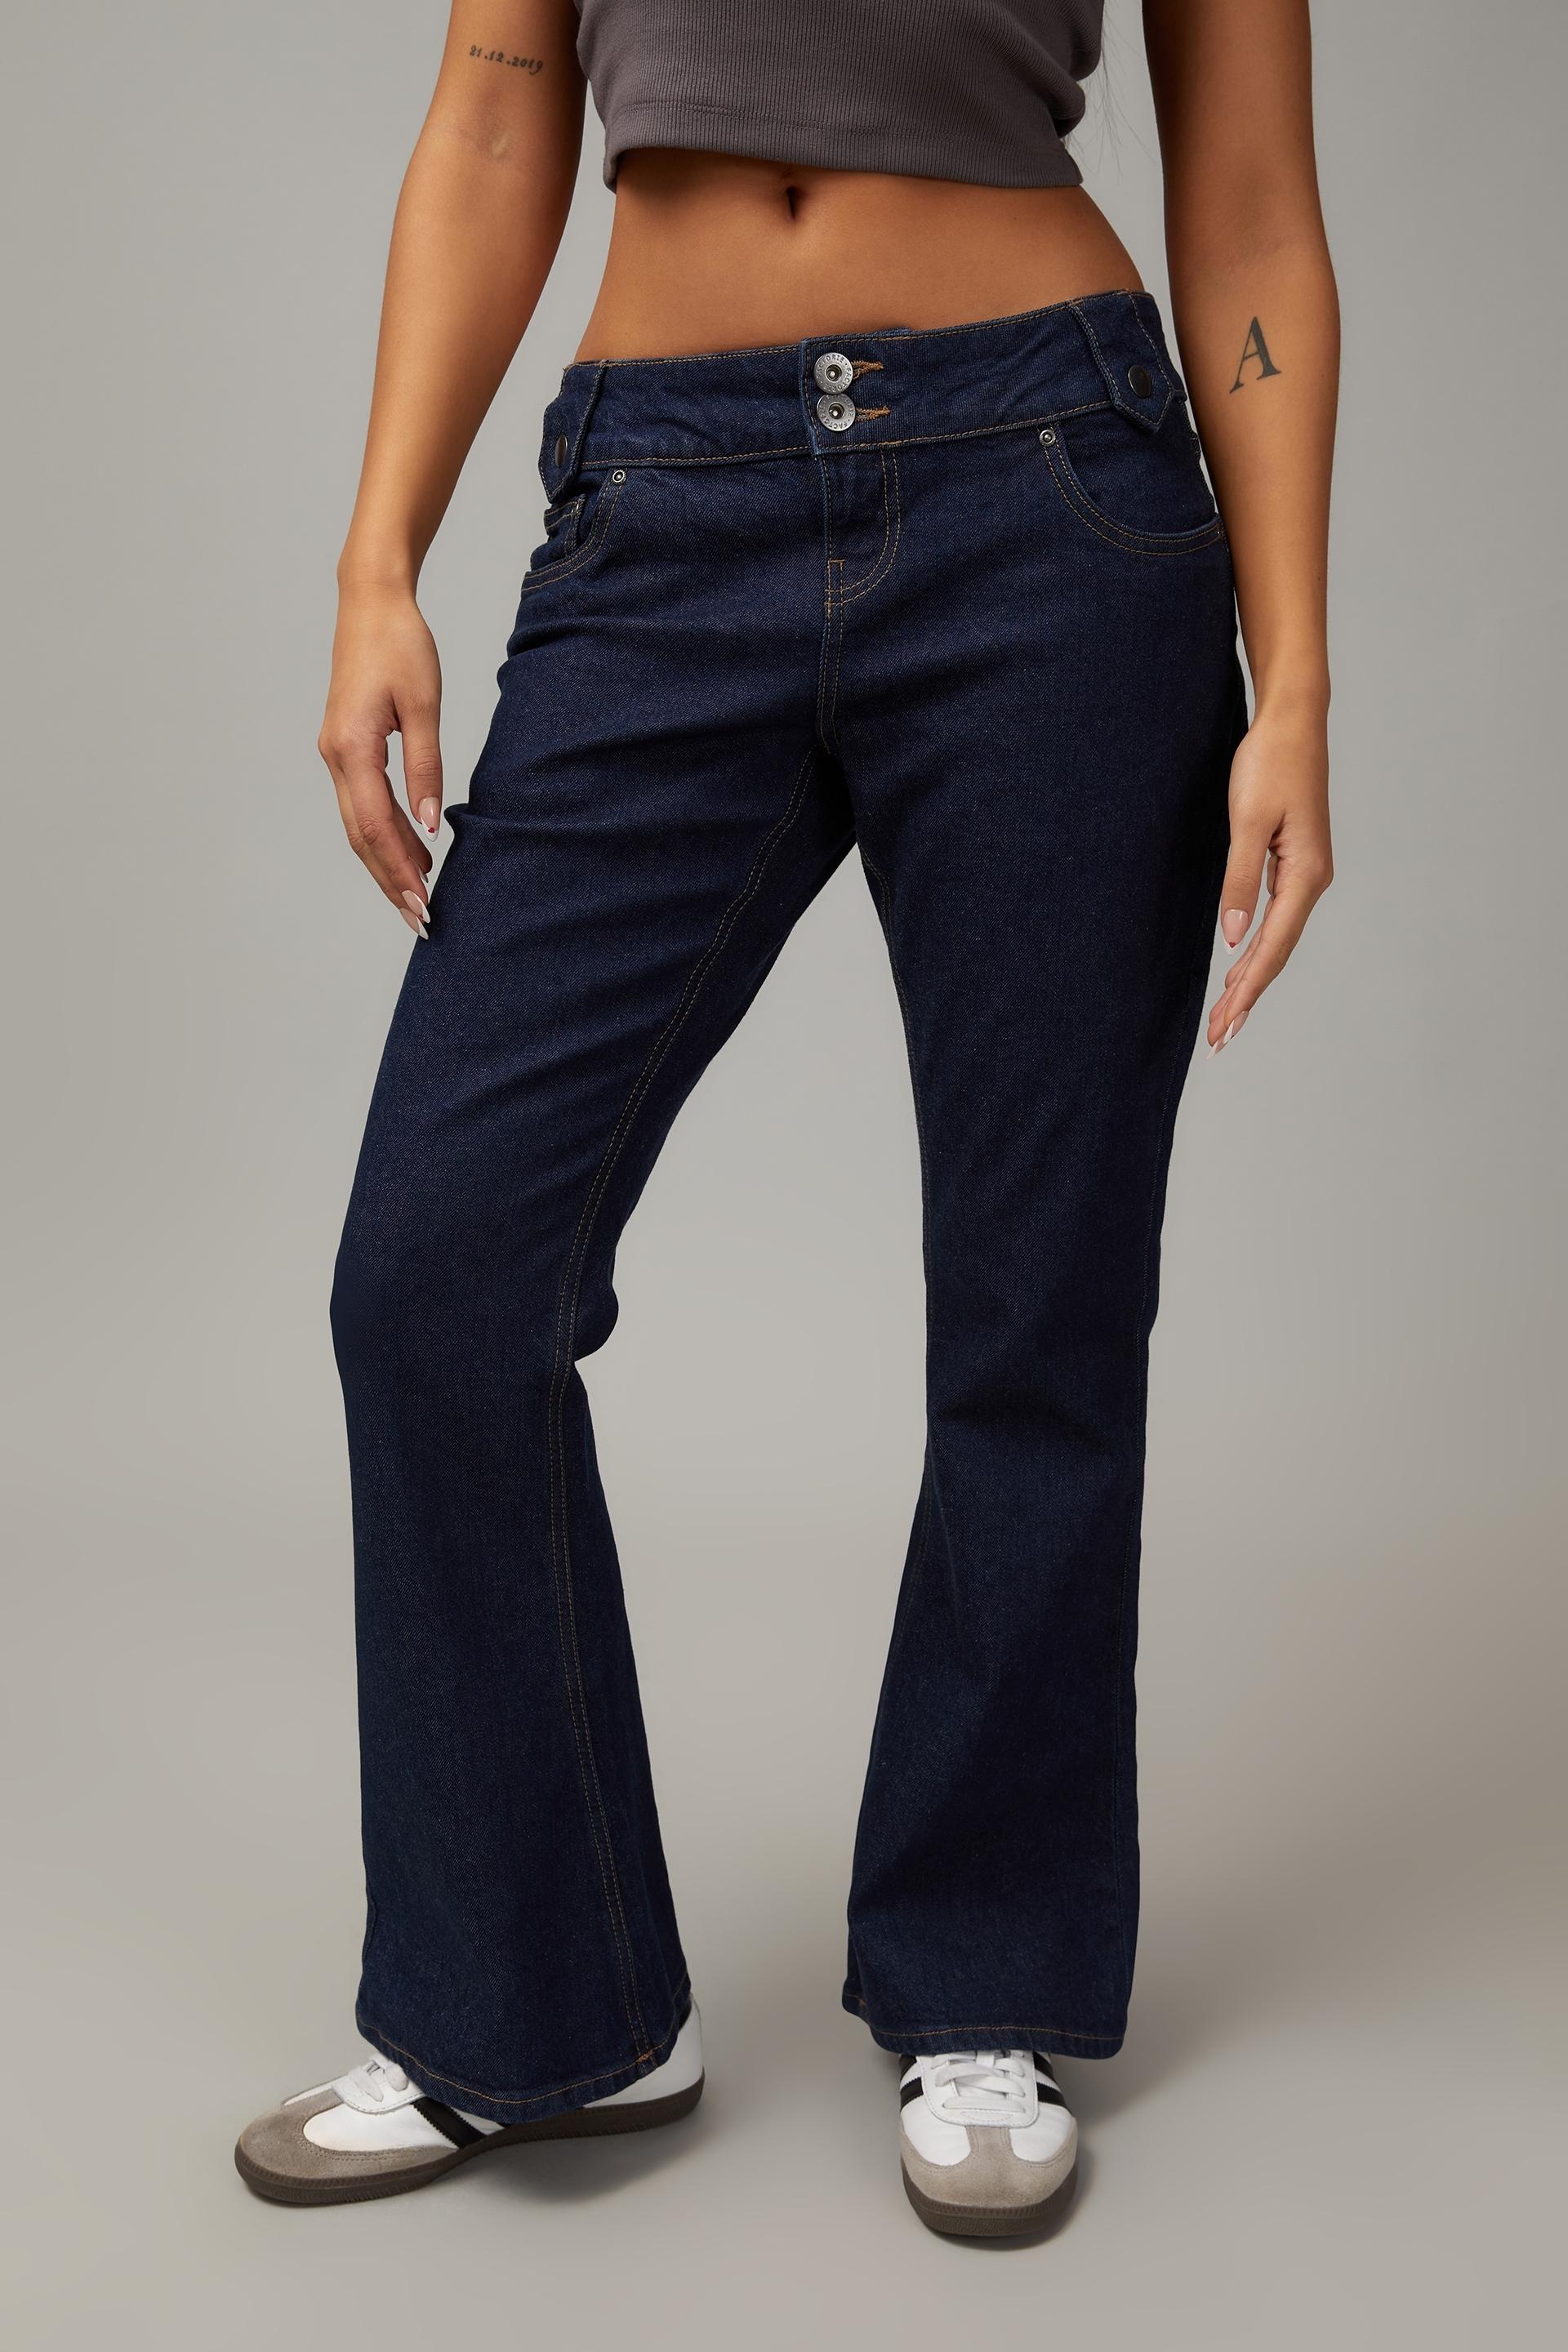 Low rise kick flare jean - raw indigo Factorie Jeans | Superbalist.com